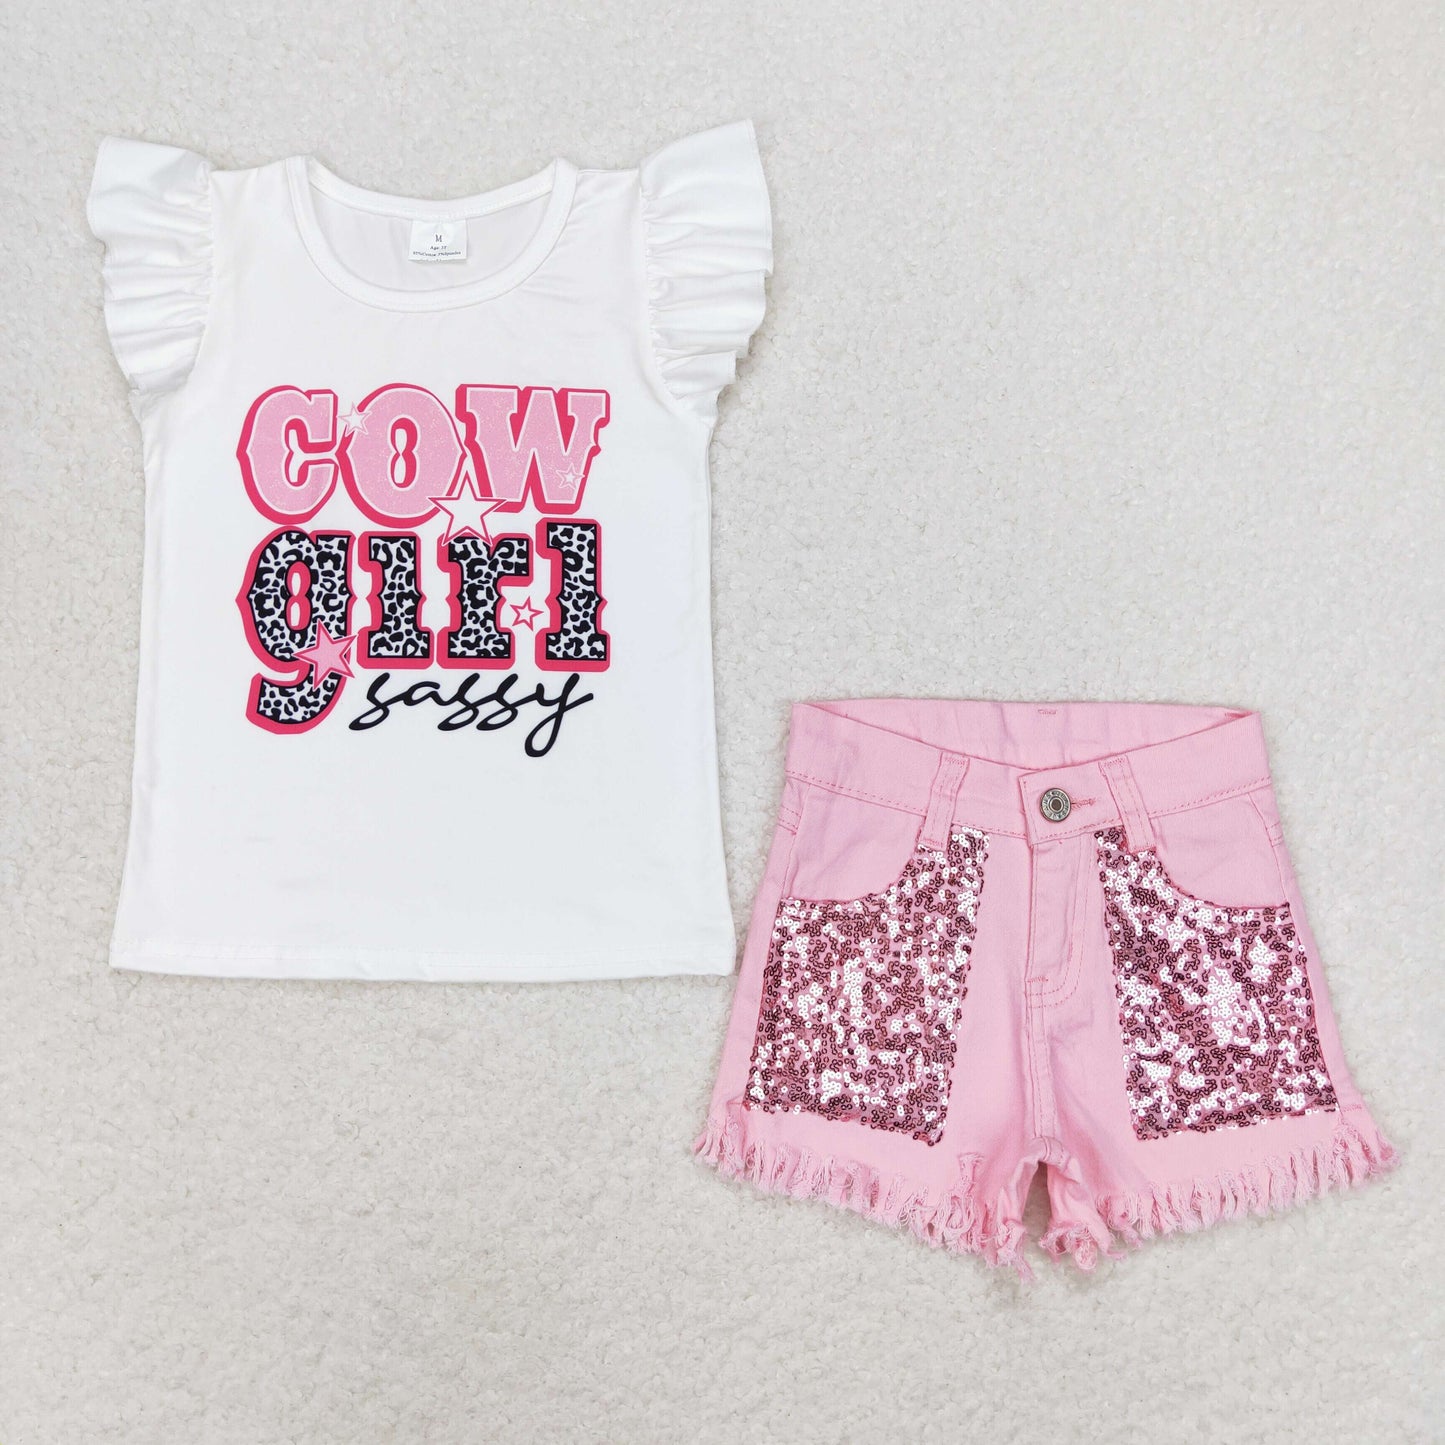 GSSO0876  Cowgirl Sassy Top Pink Denim Sequins Shorts Girls Summer Clothes Set